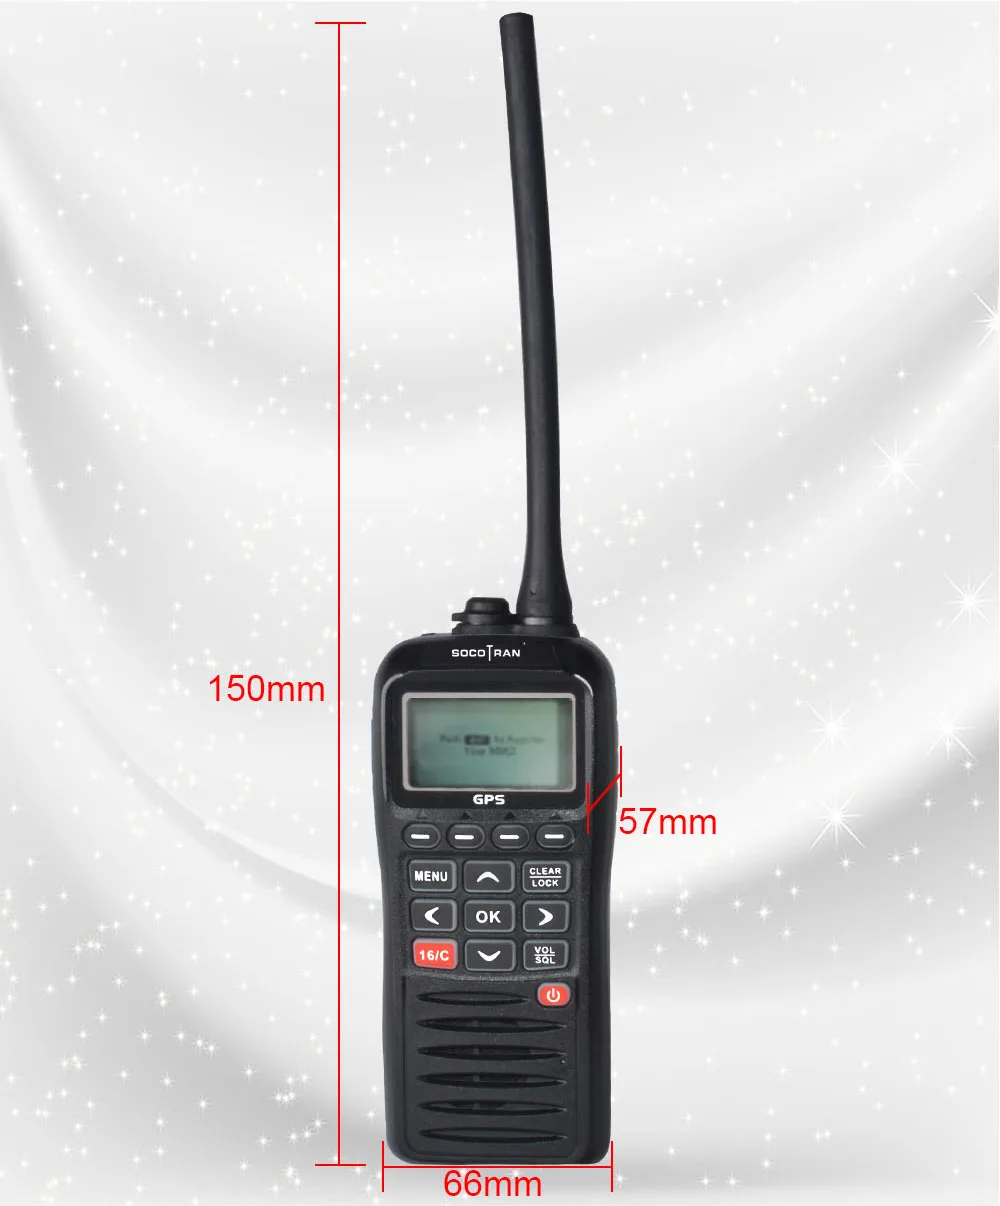 SOCOTRAN RS-38M GPS Marine Two Way Radio VHF Handheld Floats Waterproof IPX7 ATIS code Tri-watch 156.025-157.425MHz Transceiver